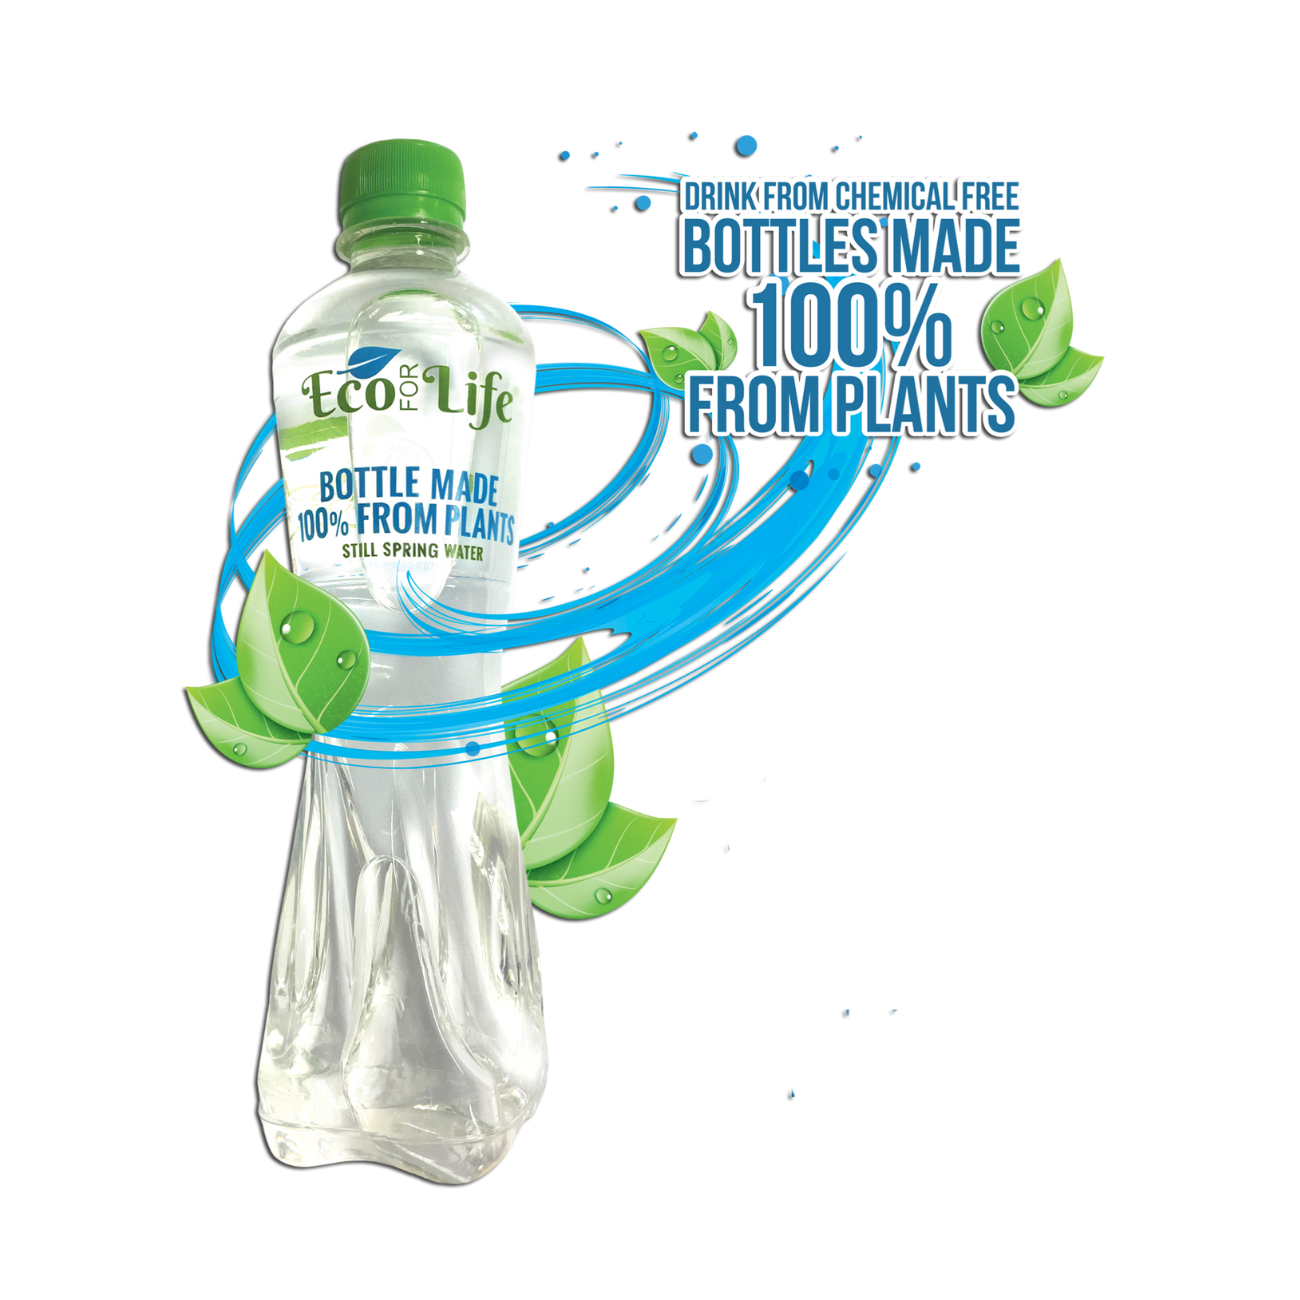 Spring Water in 100% Plant Bottle 500ml